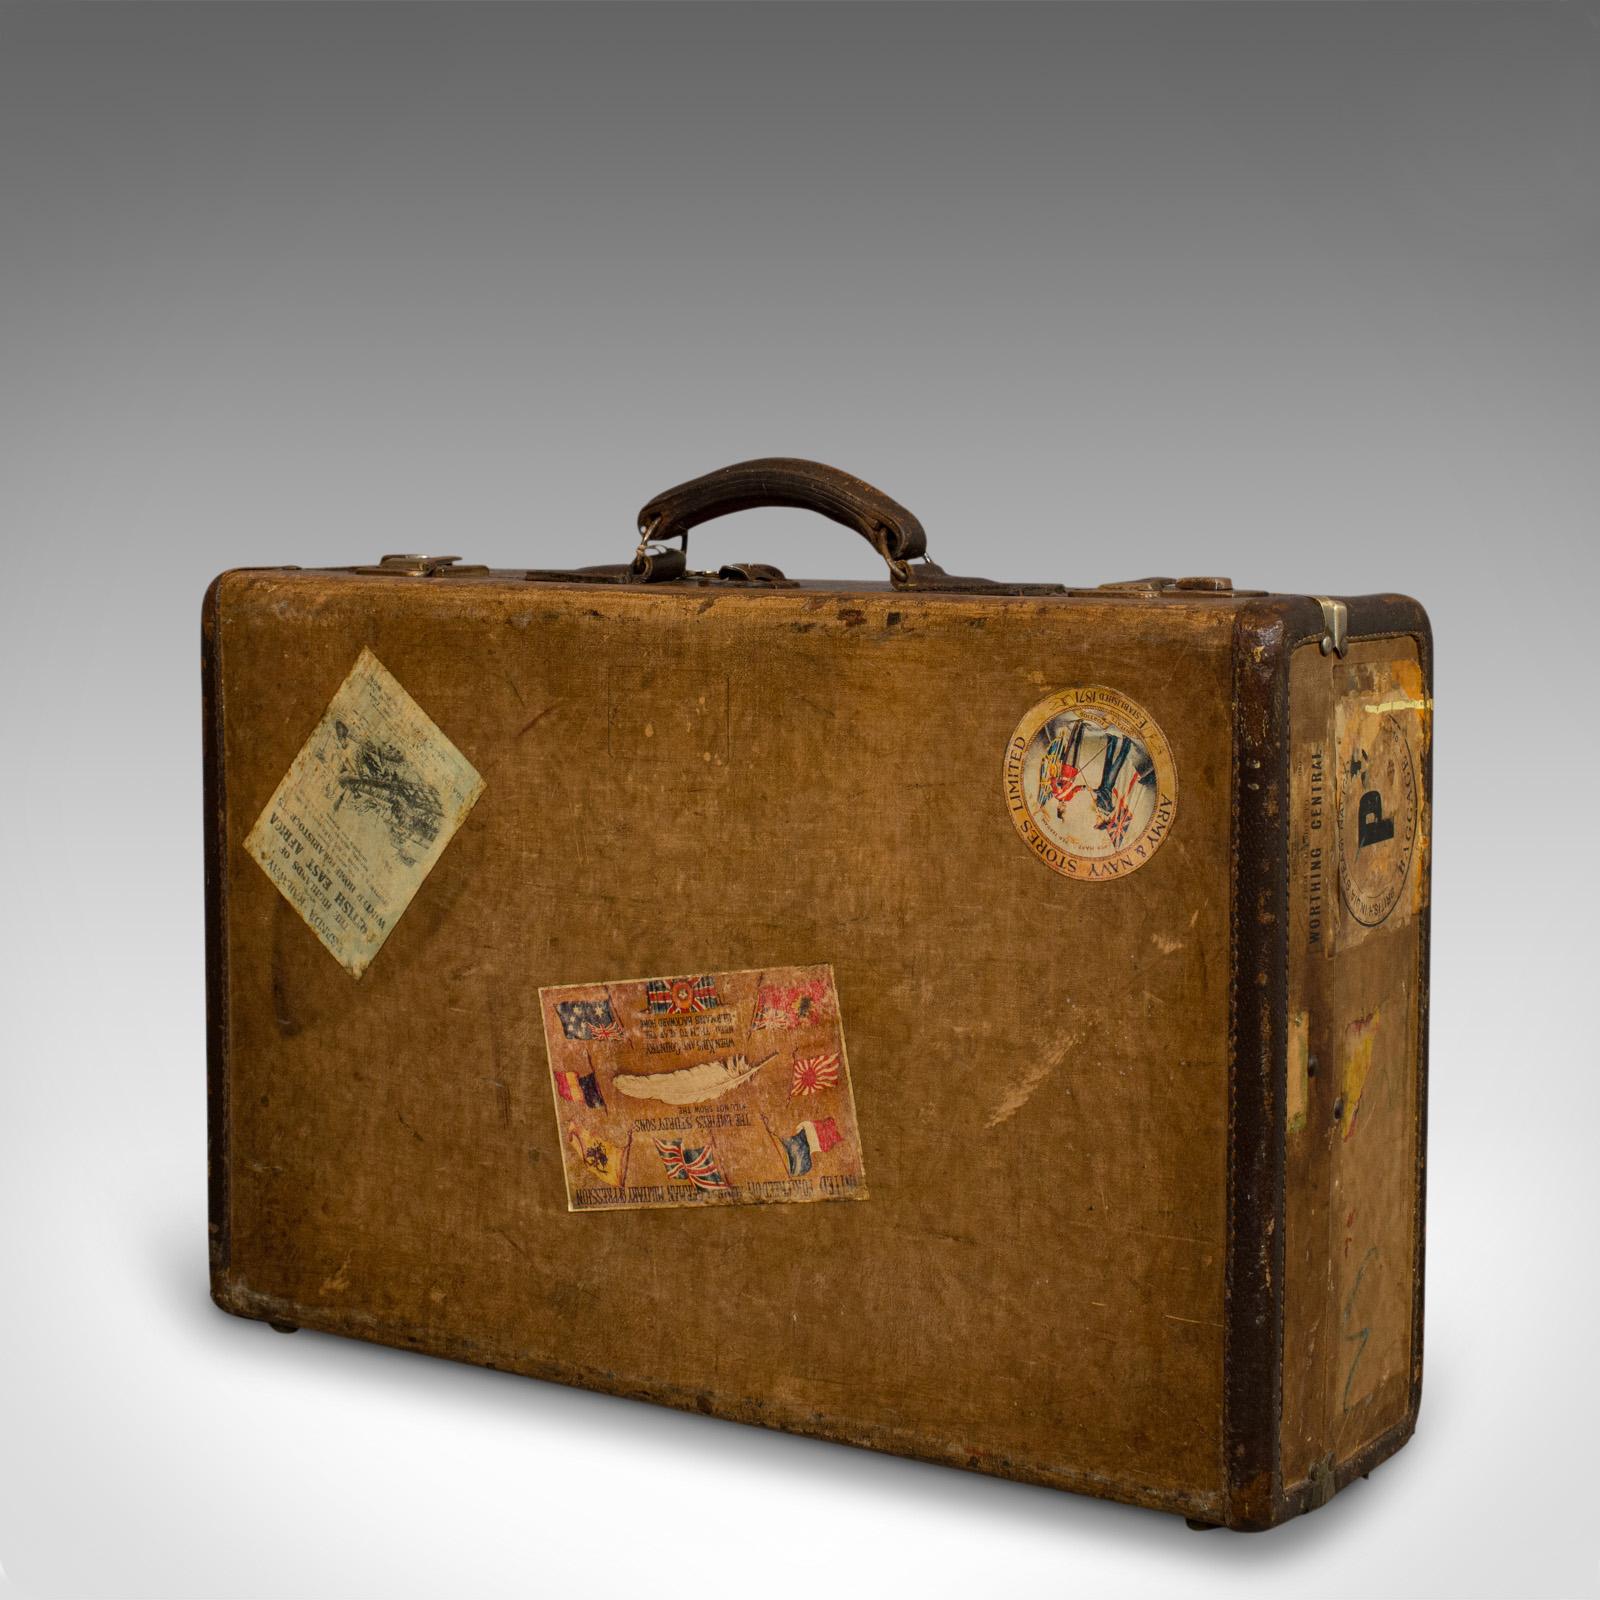 Vintage Suitcase, English, Leather Bound, Travel Case, Decoration, 20th Century 1